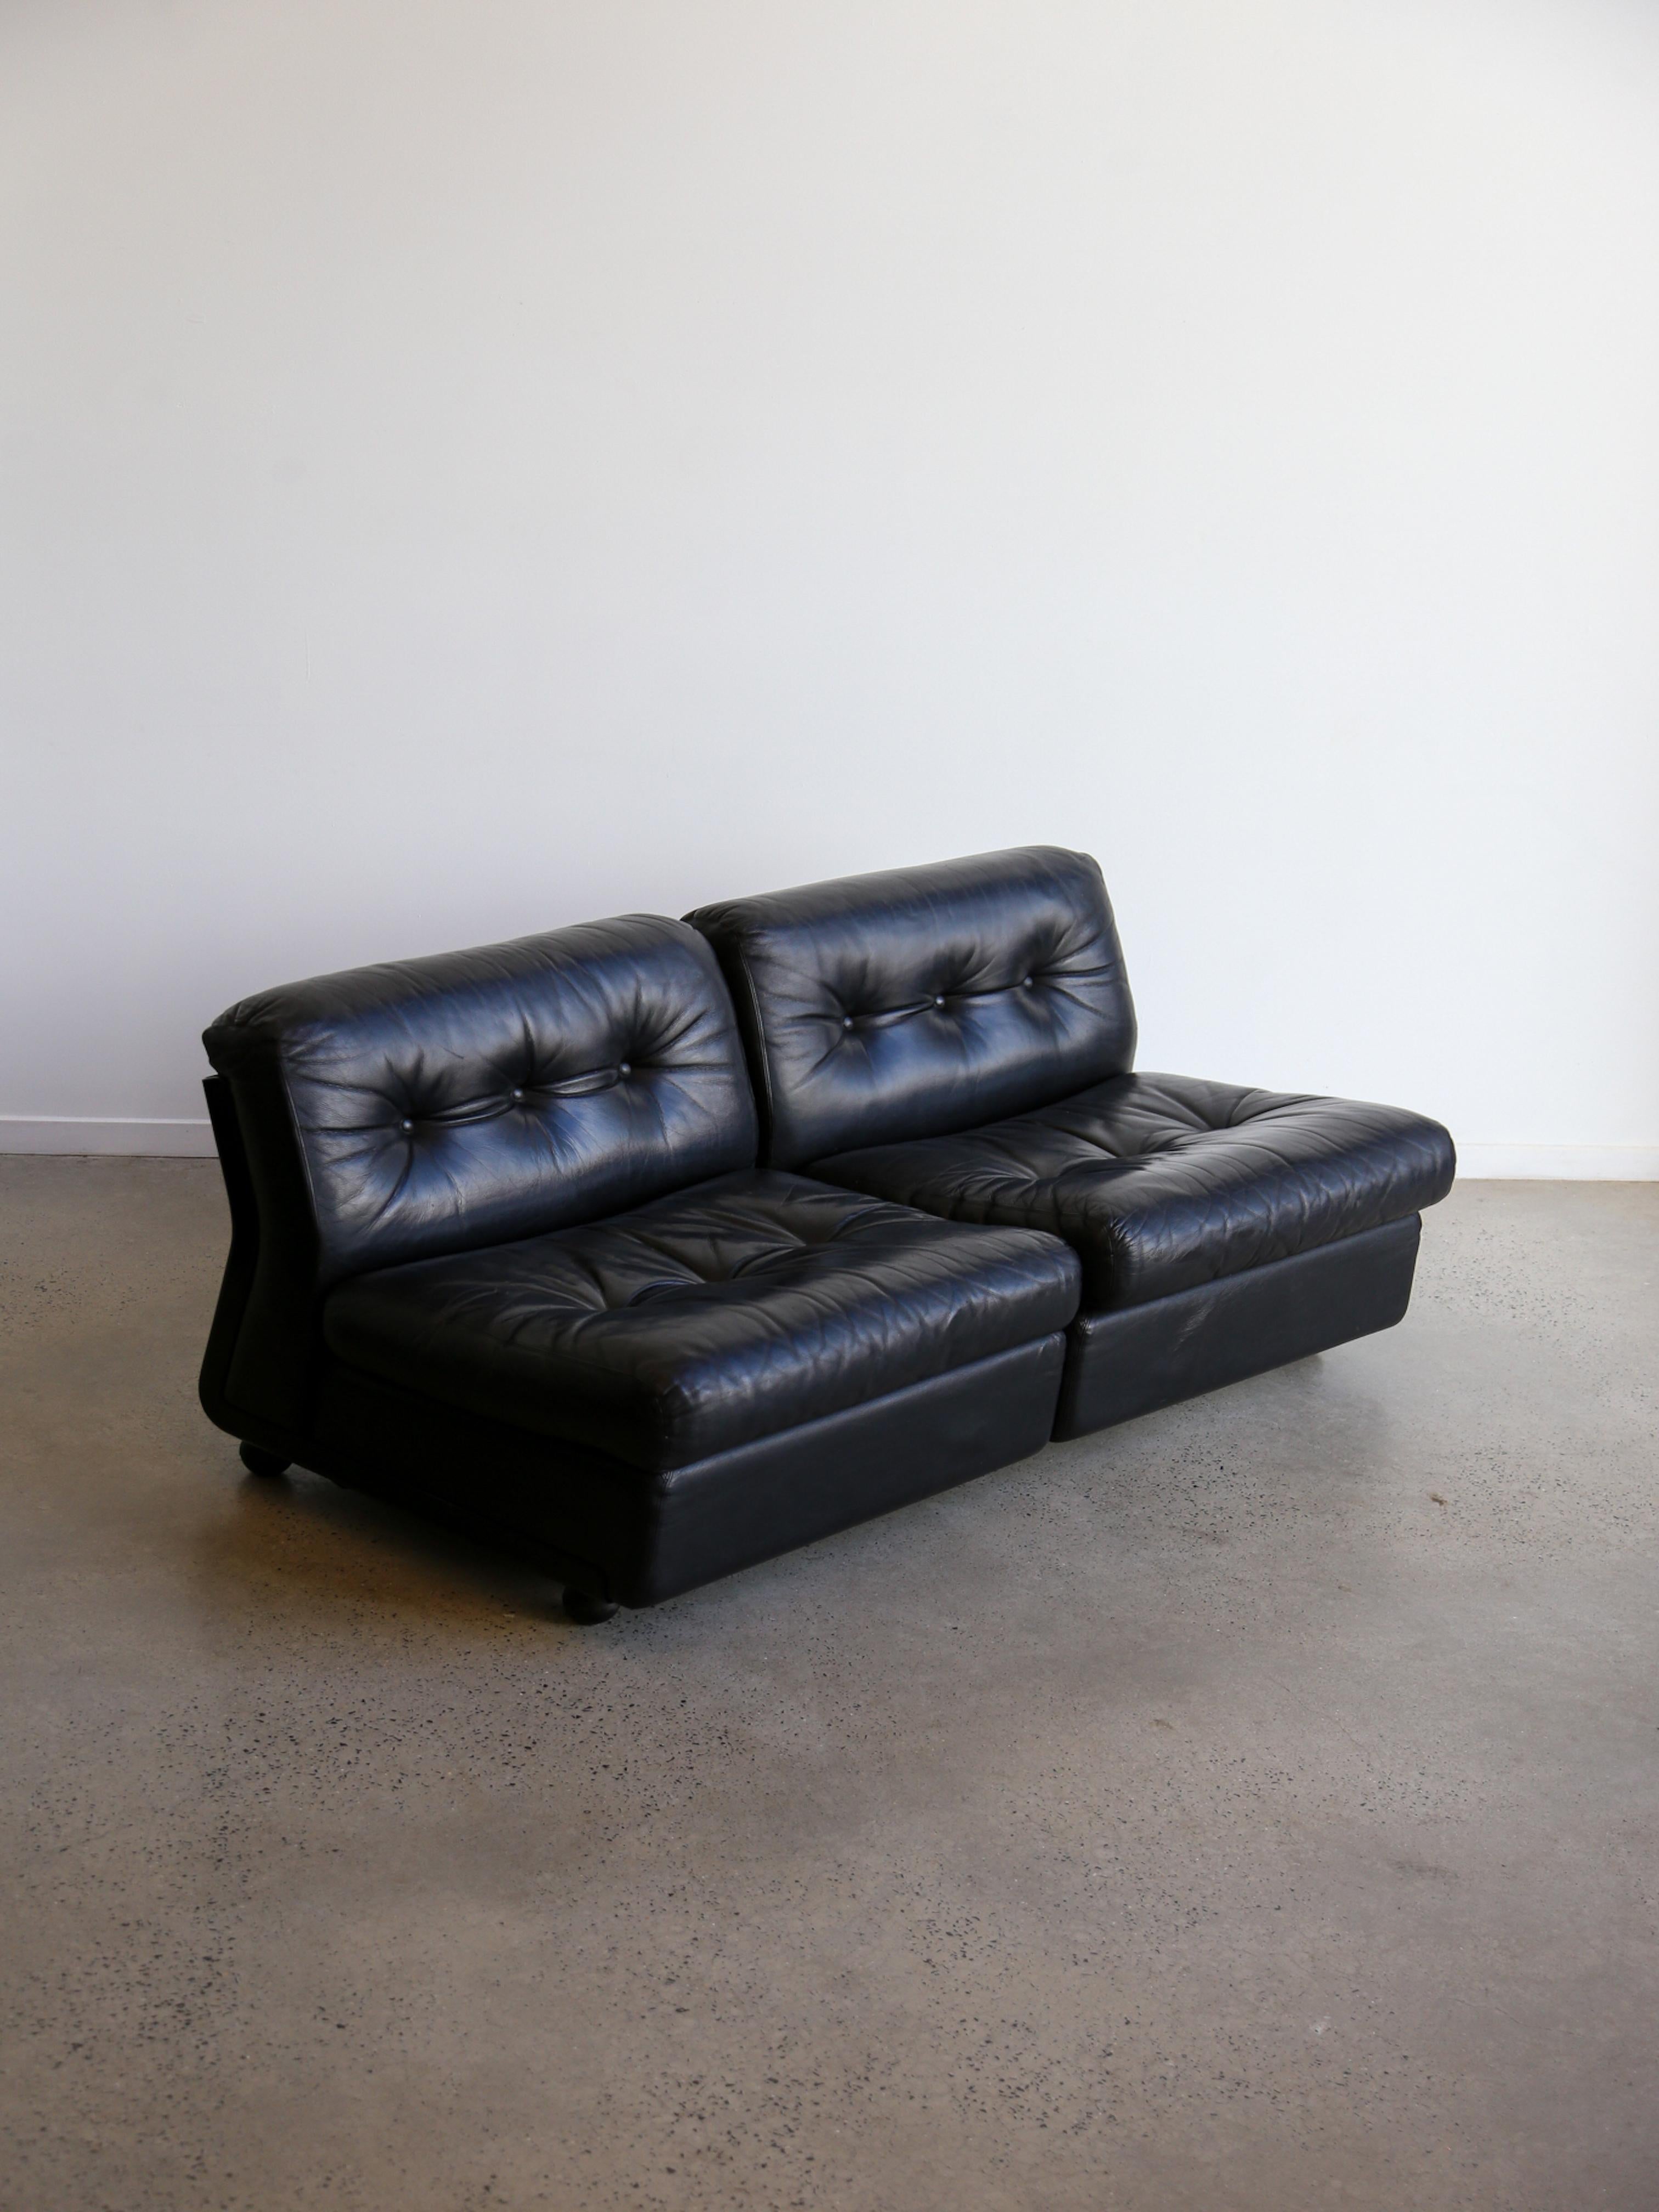 Fin du 20e siècle Amanta Modular Sofa in Black Leather Par Mario Bellini pour B&B Italia 1970 en vente